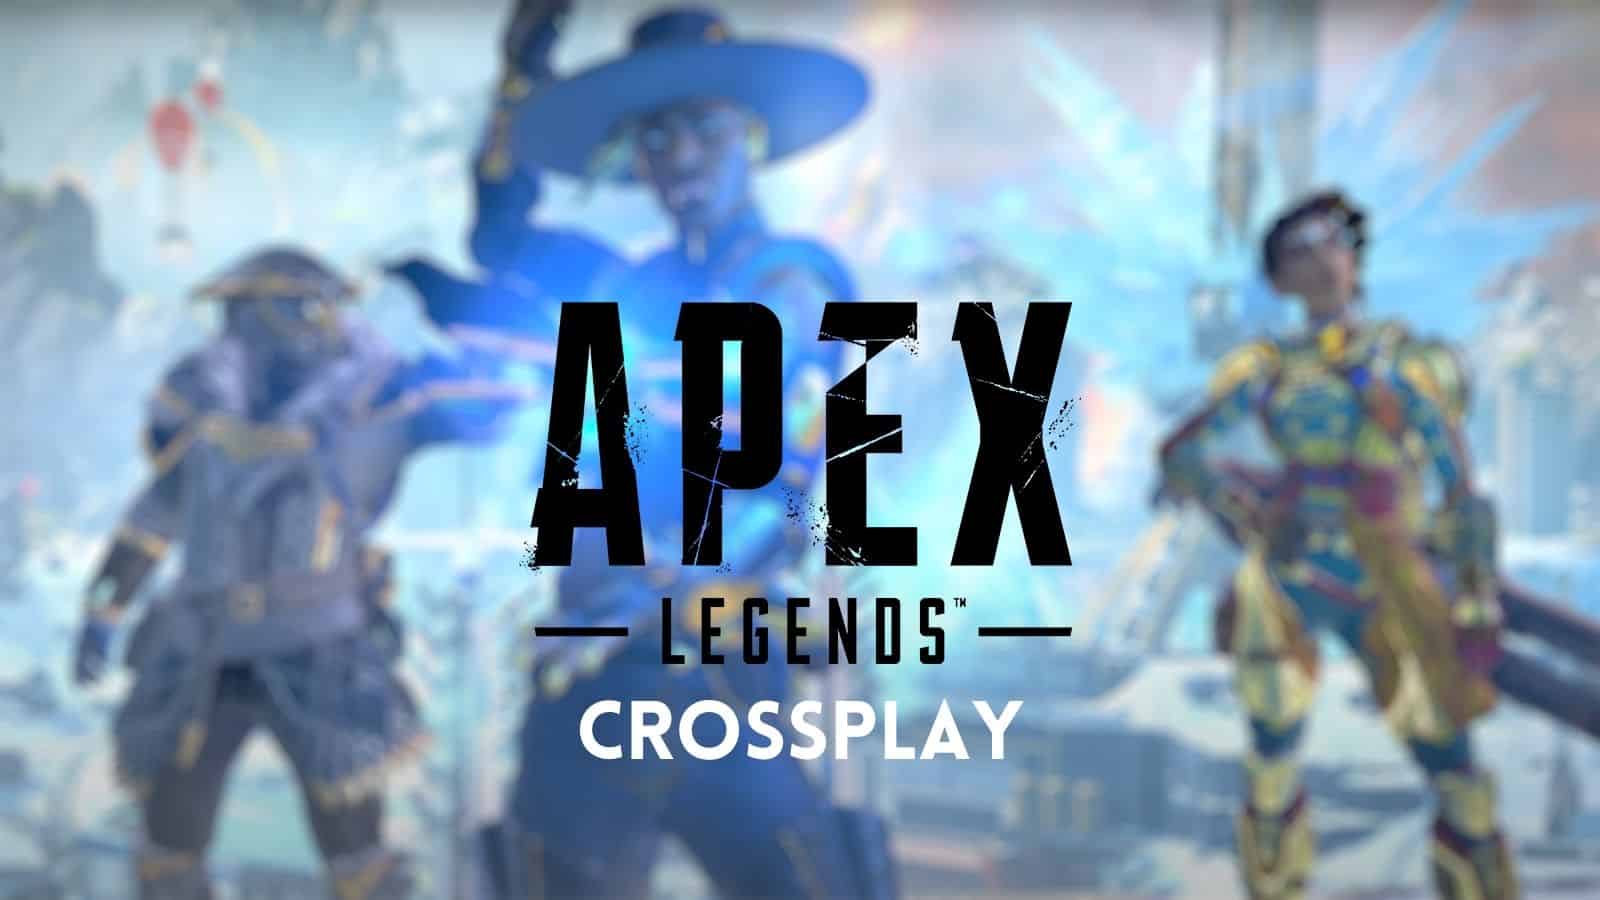 Apex Legends герои Bloodhound, Seer и Rampart